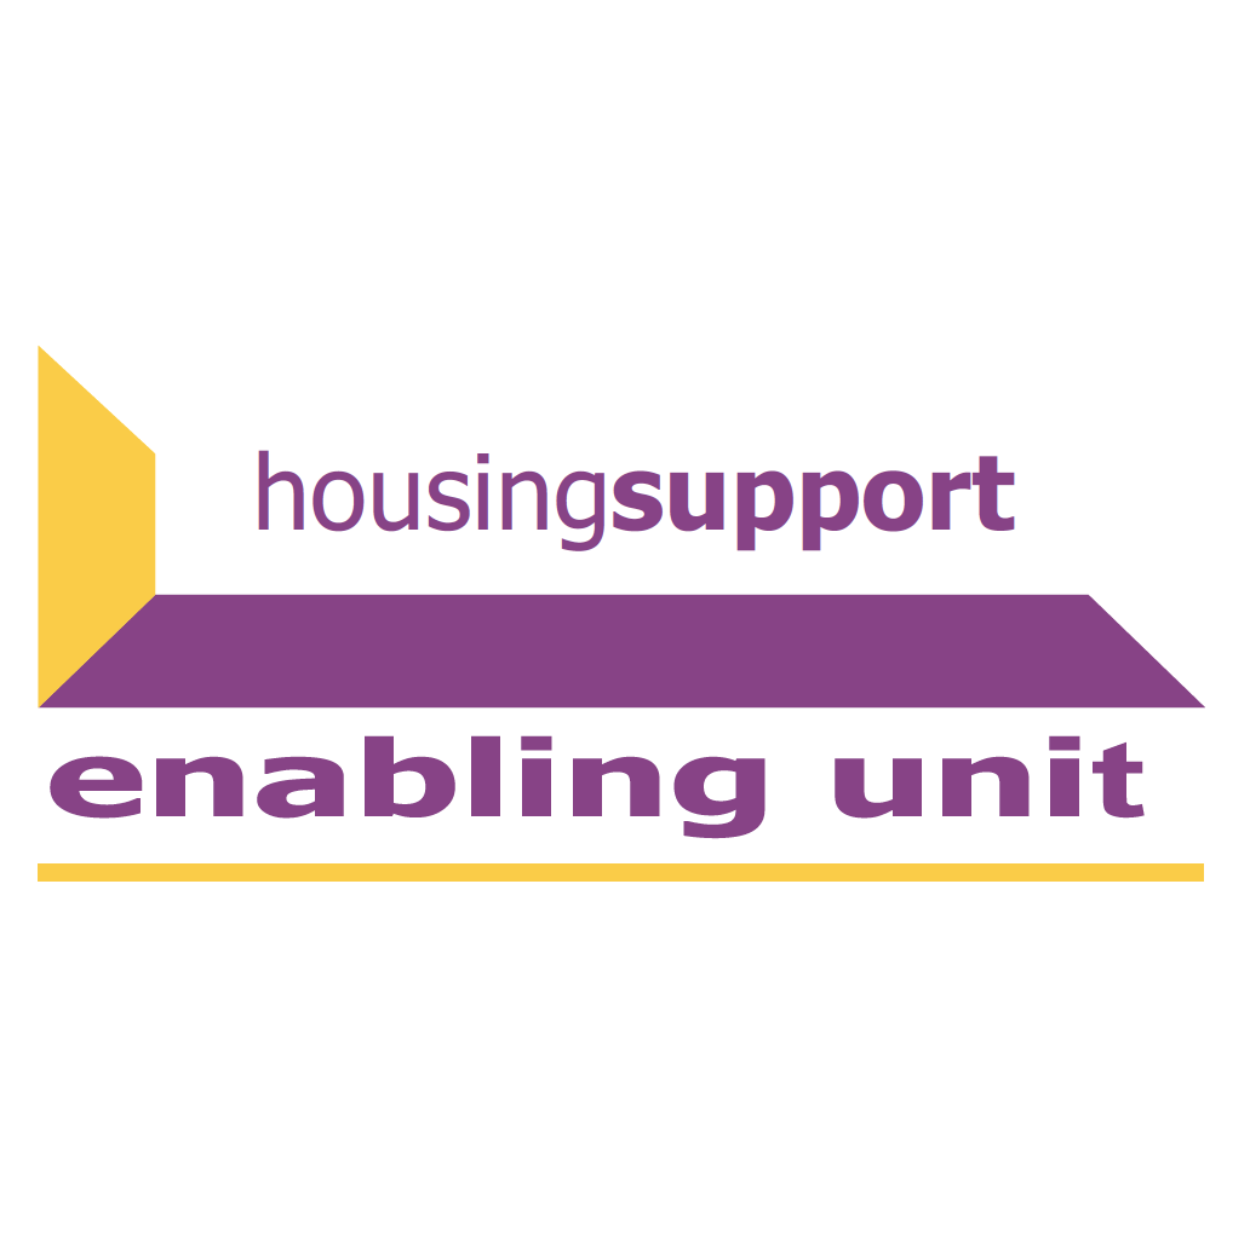 Housing support enabling unit logo